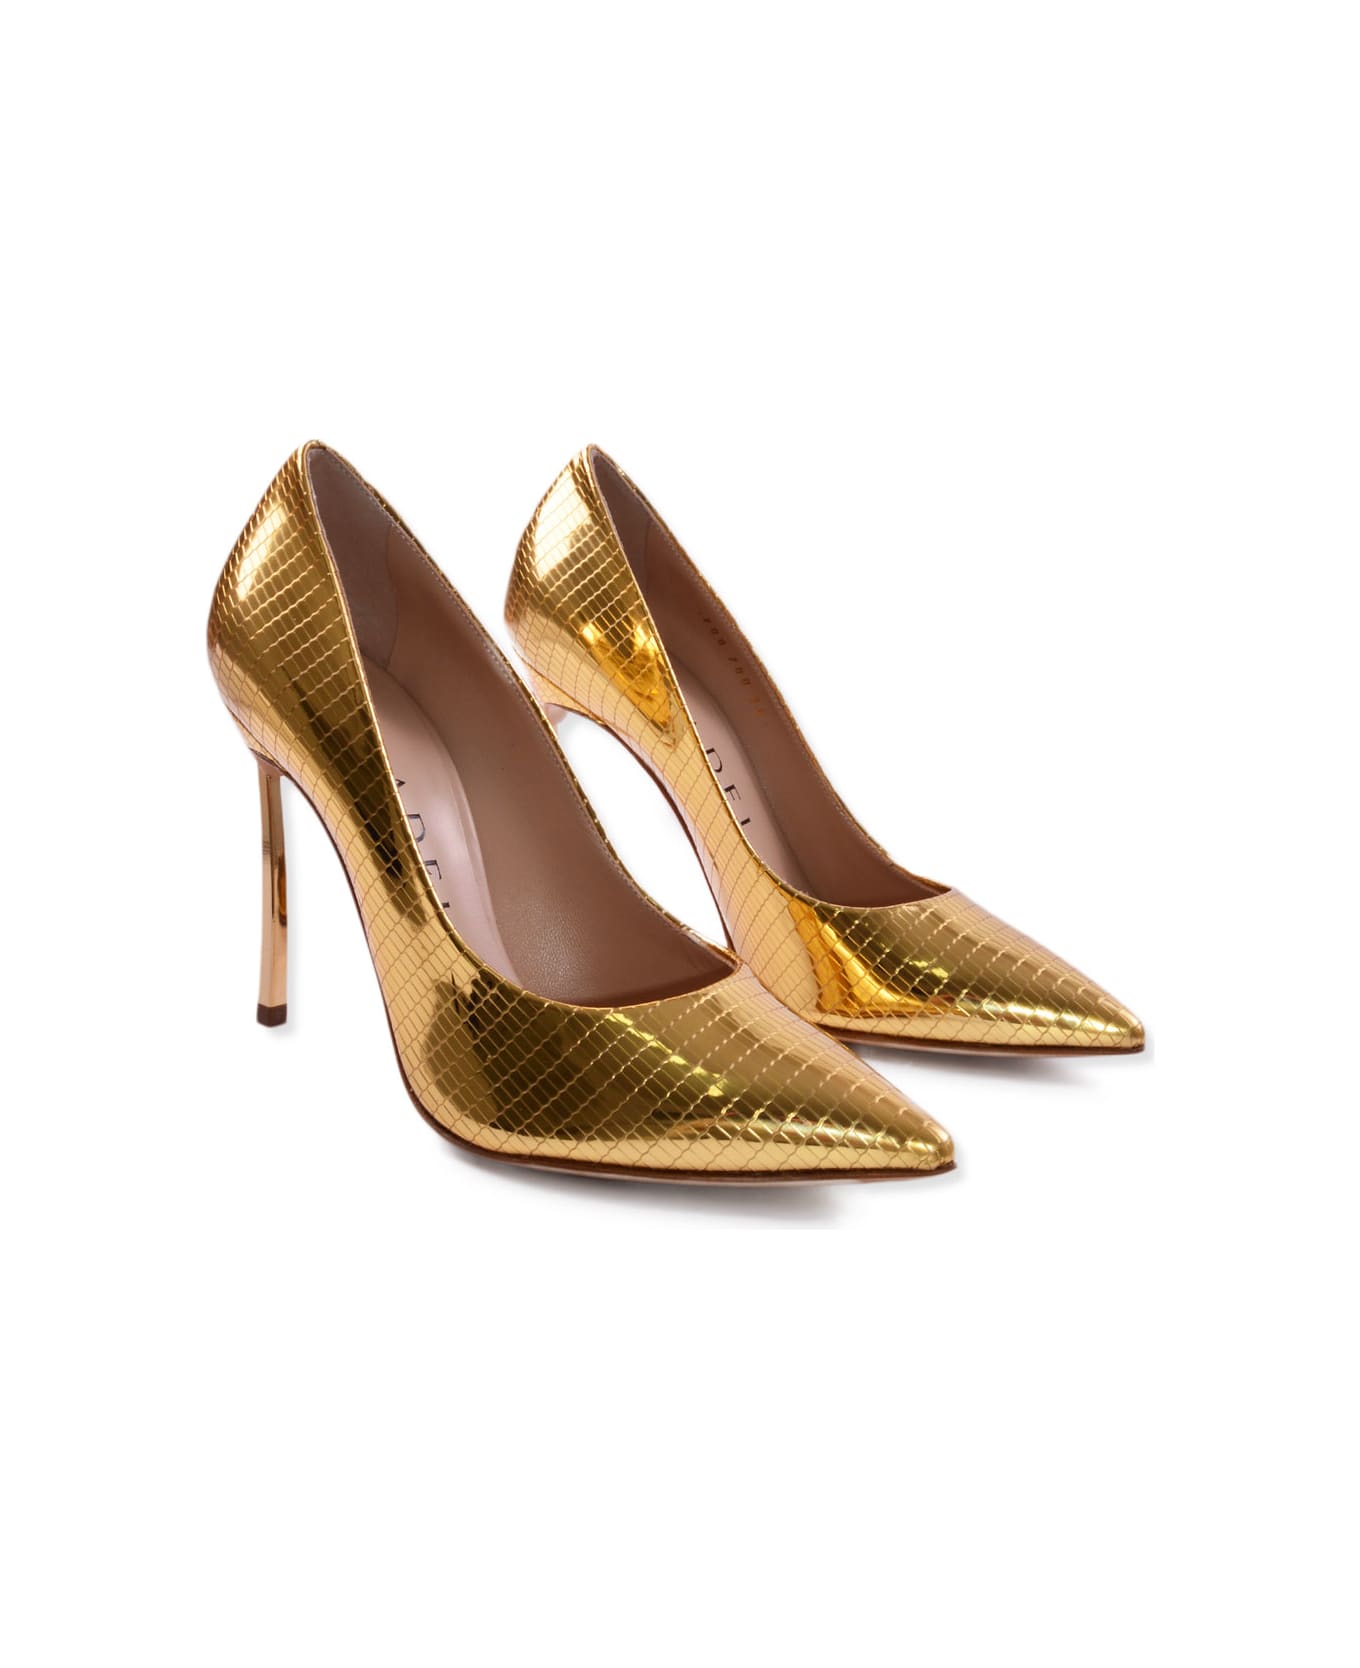 Casadei Shoes With Heels - Golden